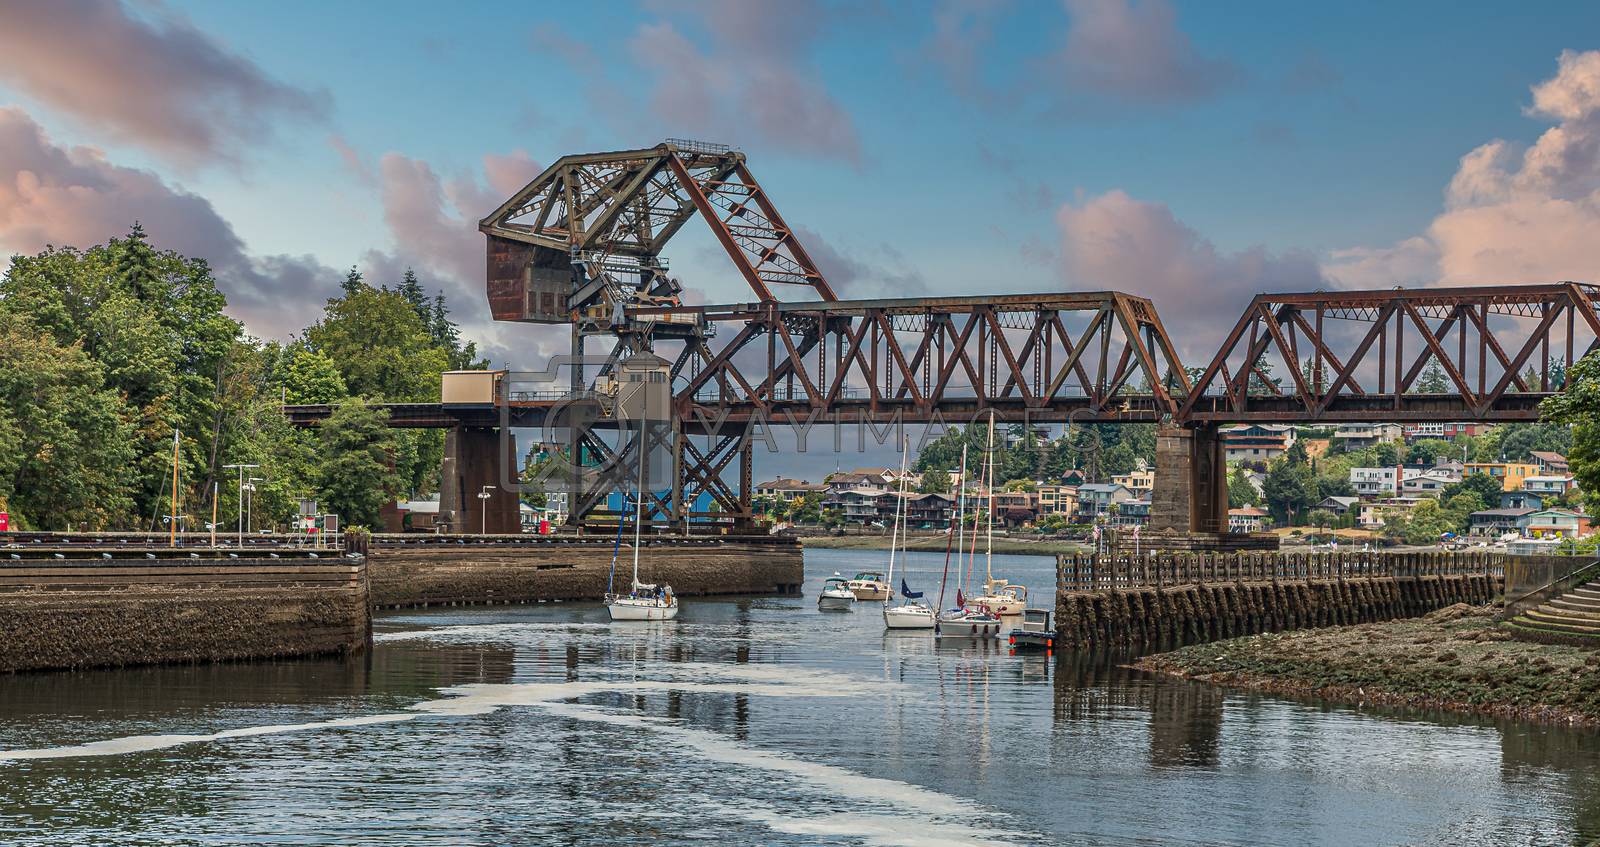 Royalty free image of Salmon Bay Bridge in Ballard Locks by dbvirago